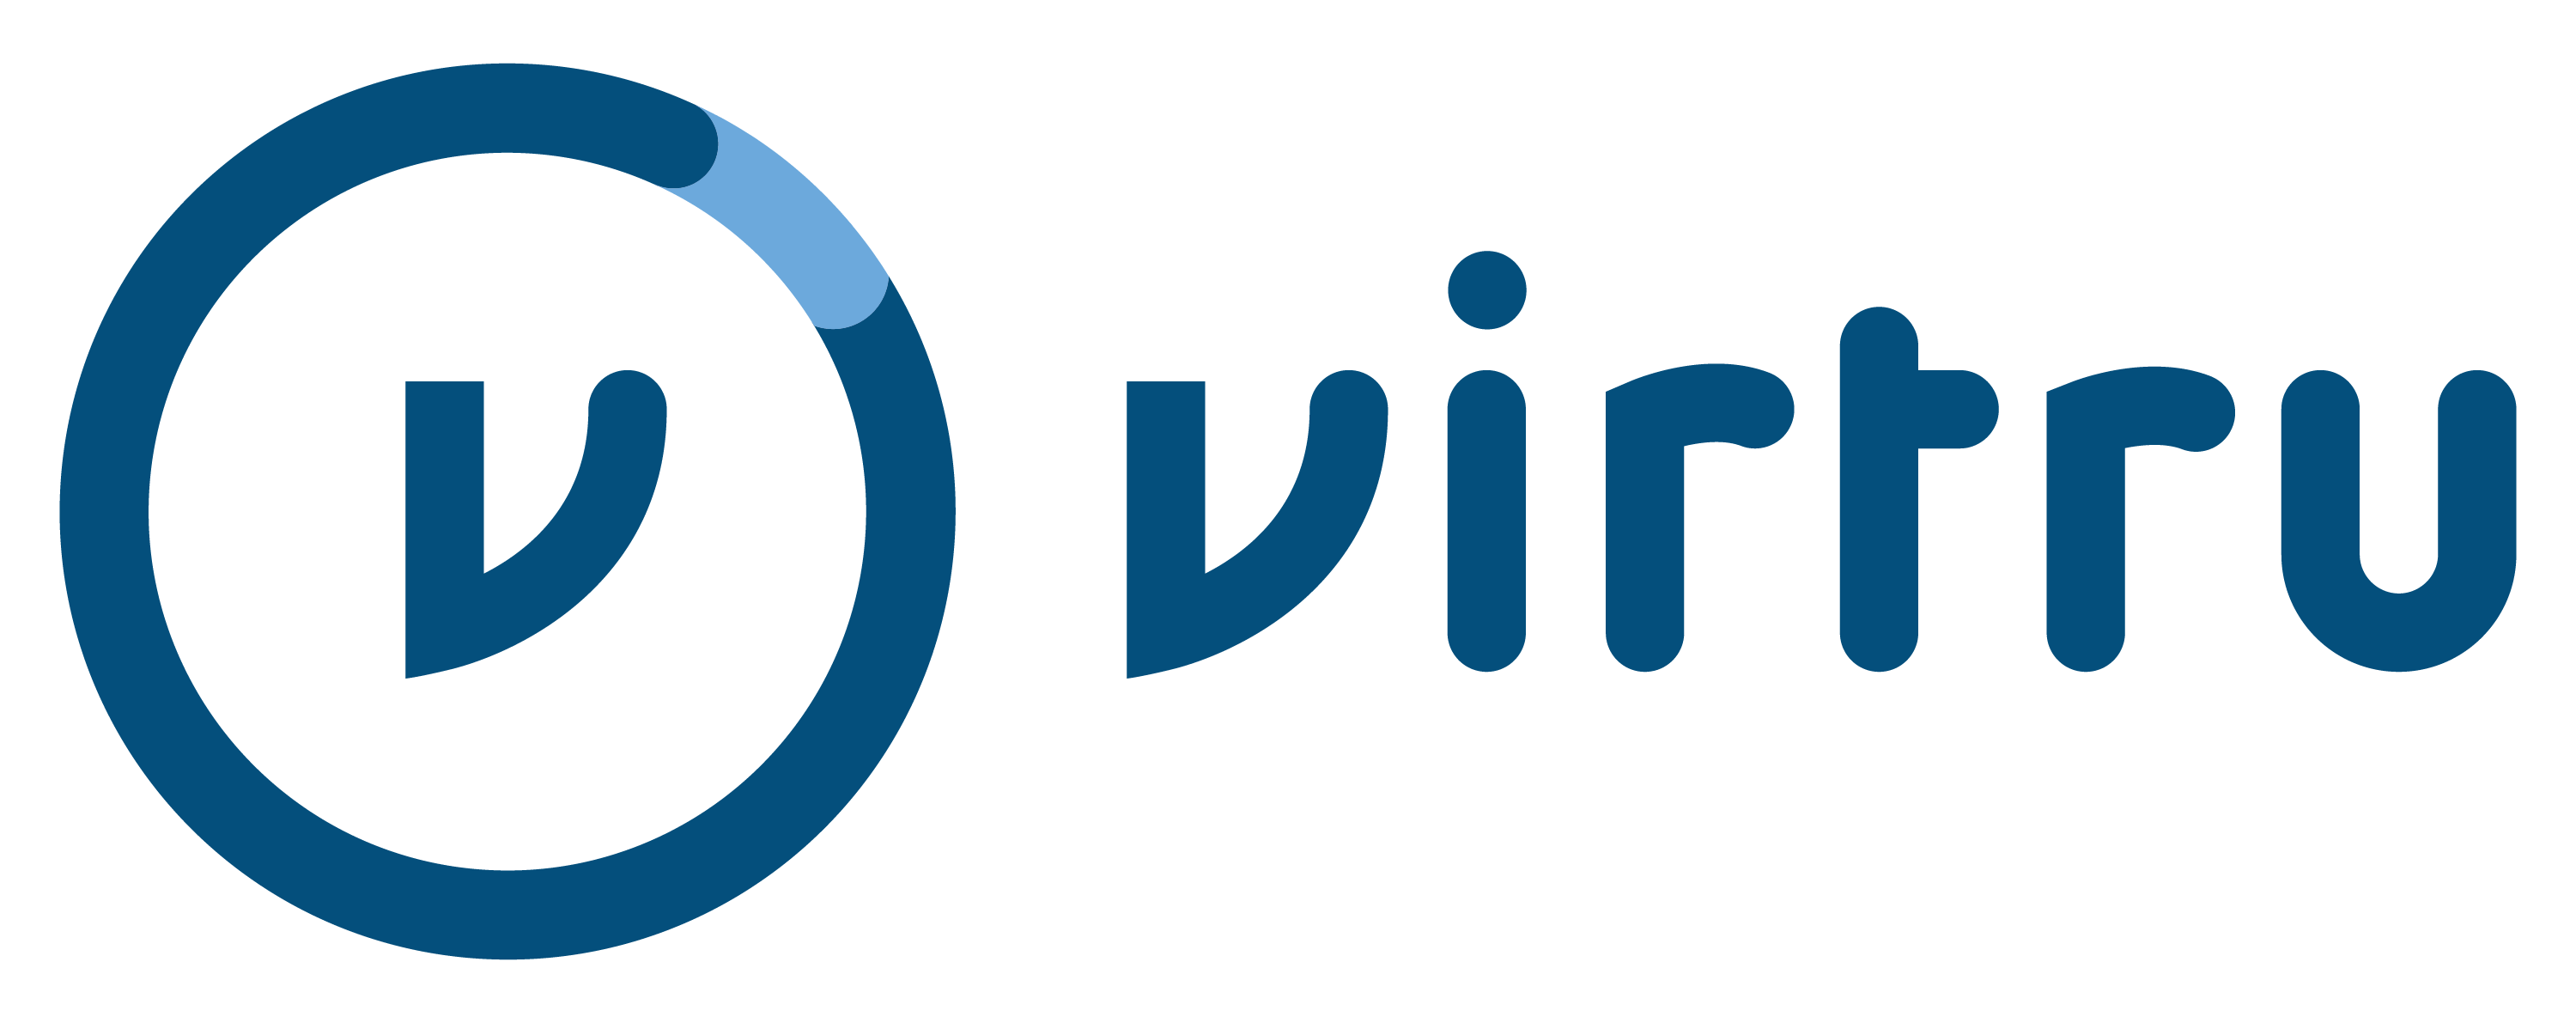 Virtru Logo - Home Button